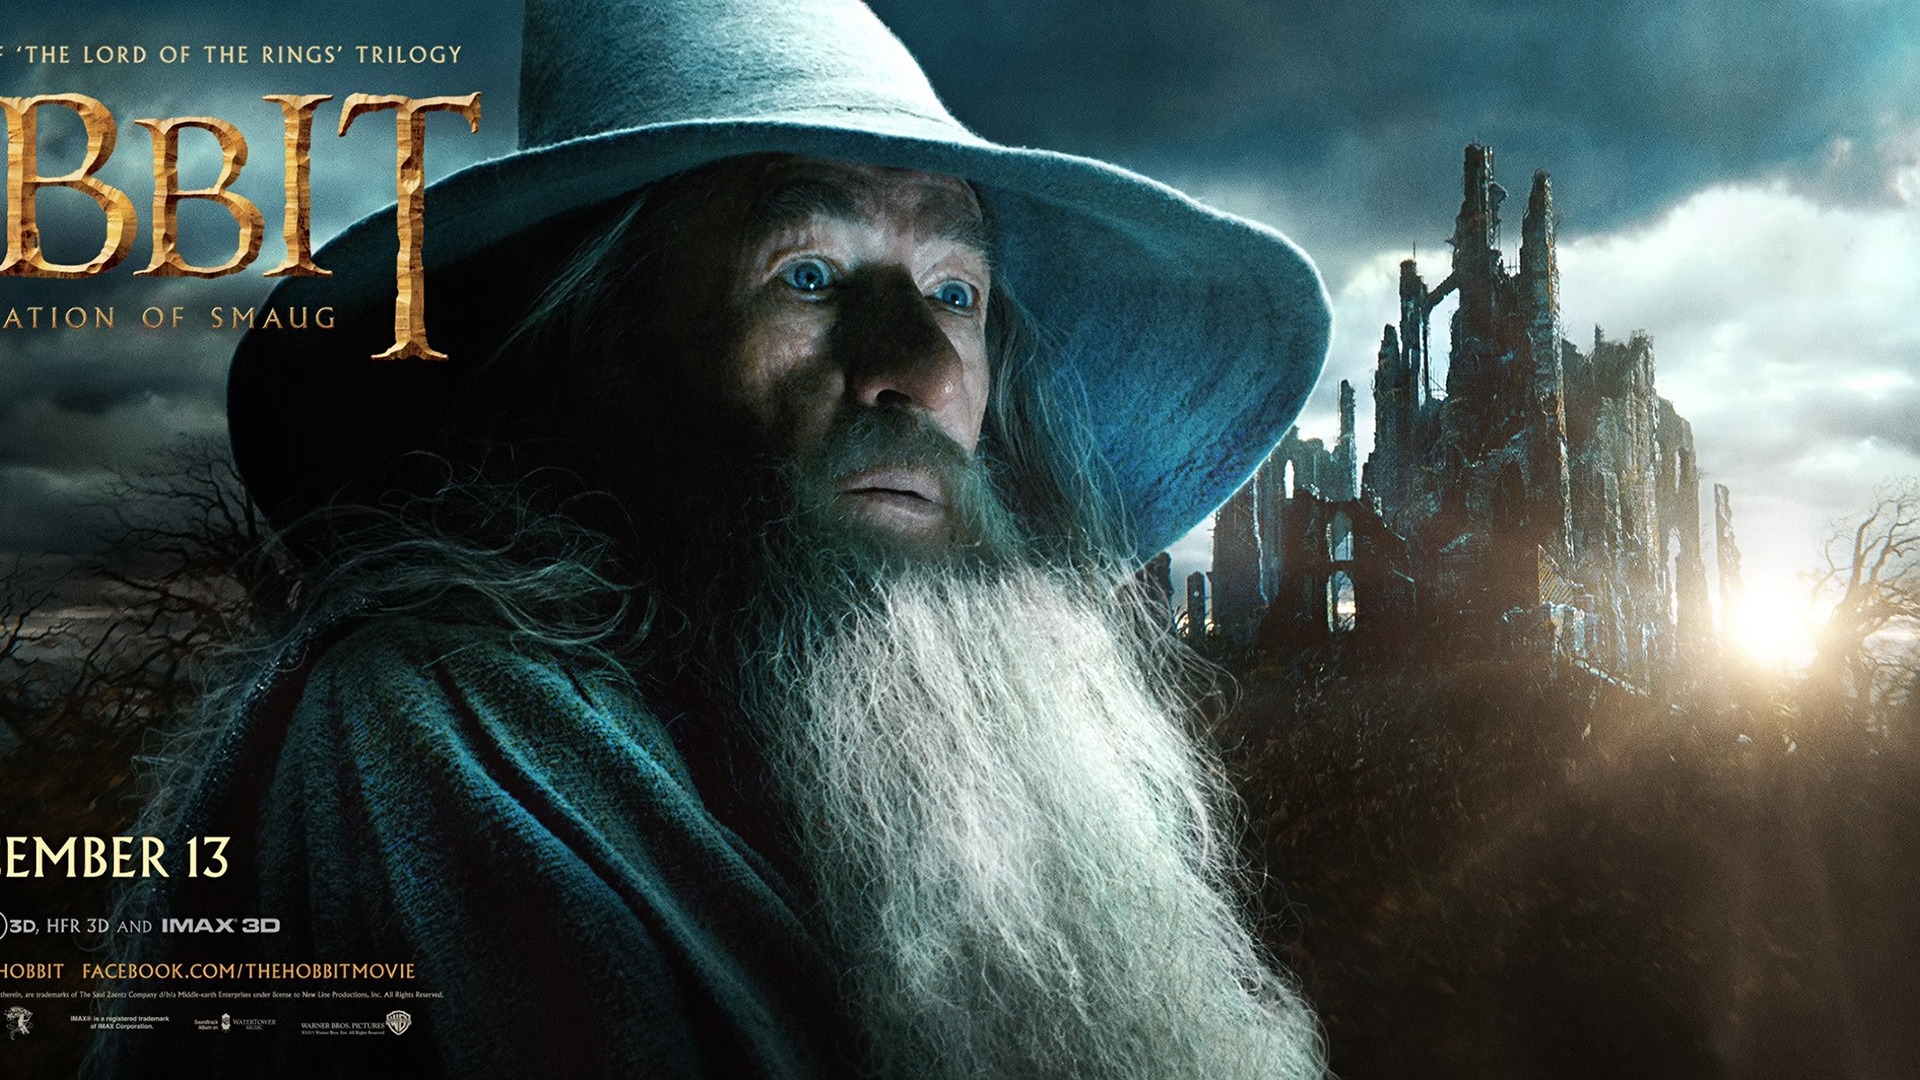 Gandalf The Desolation Of Smaug for 1920 x 1080 HDTV 1080p resolution